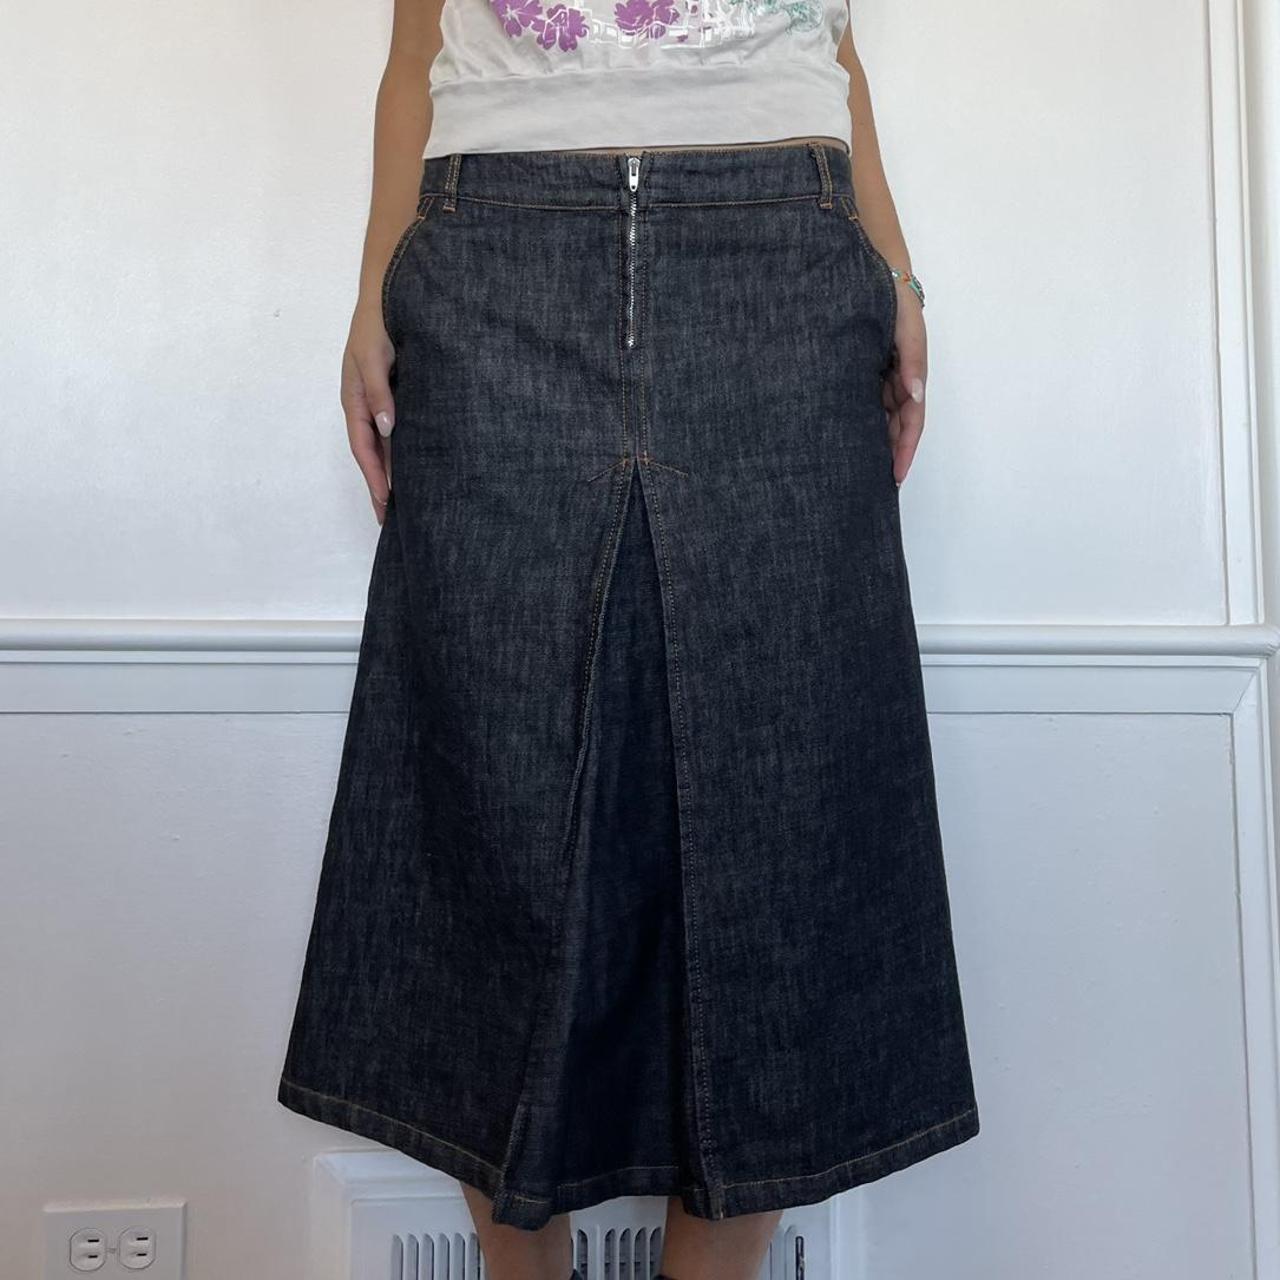 Product Image 1 - Amazing dark wash denim skirt!!